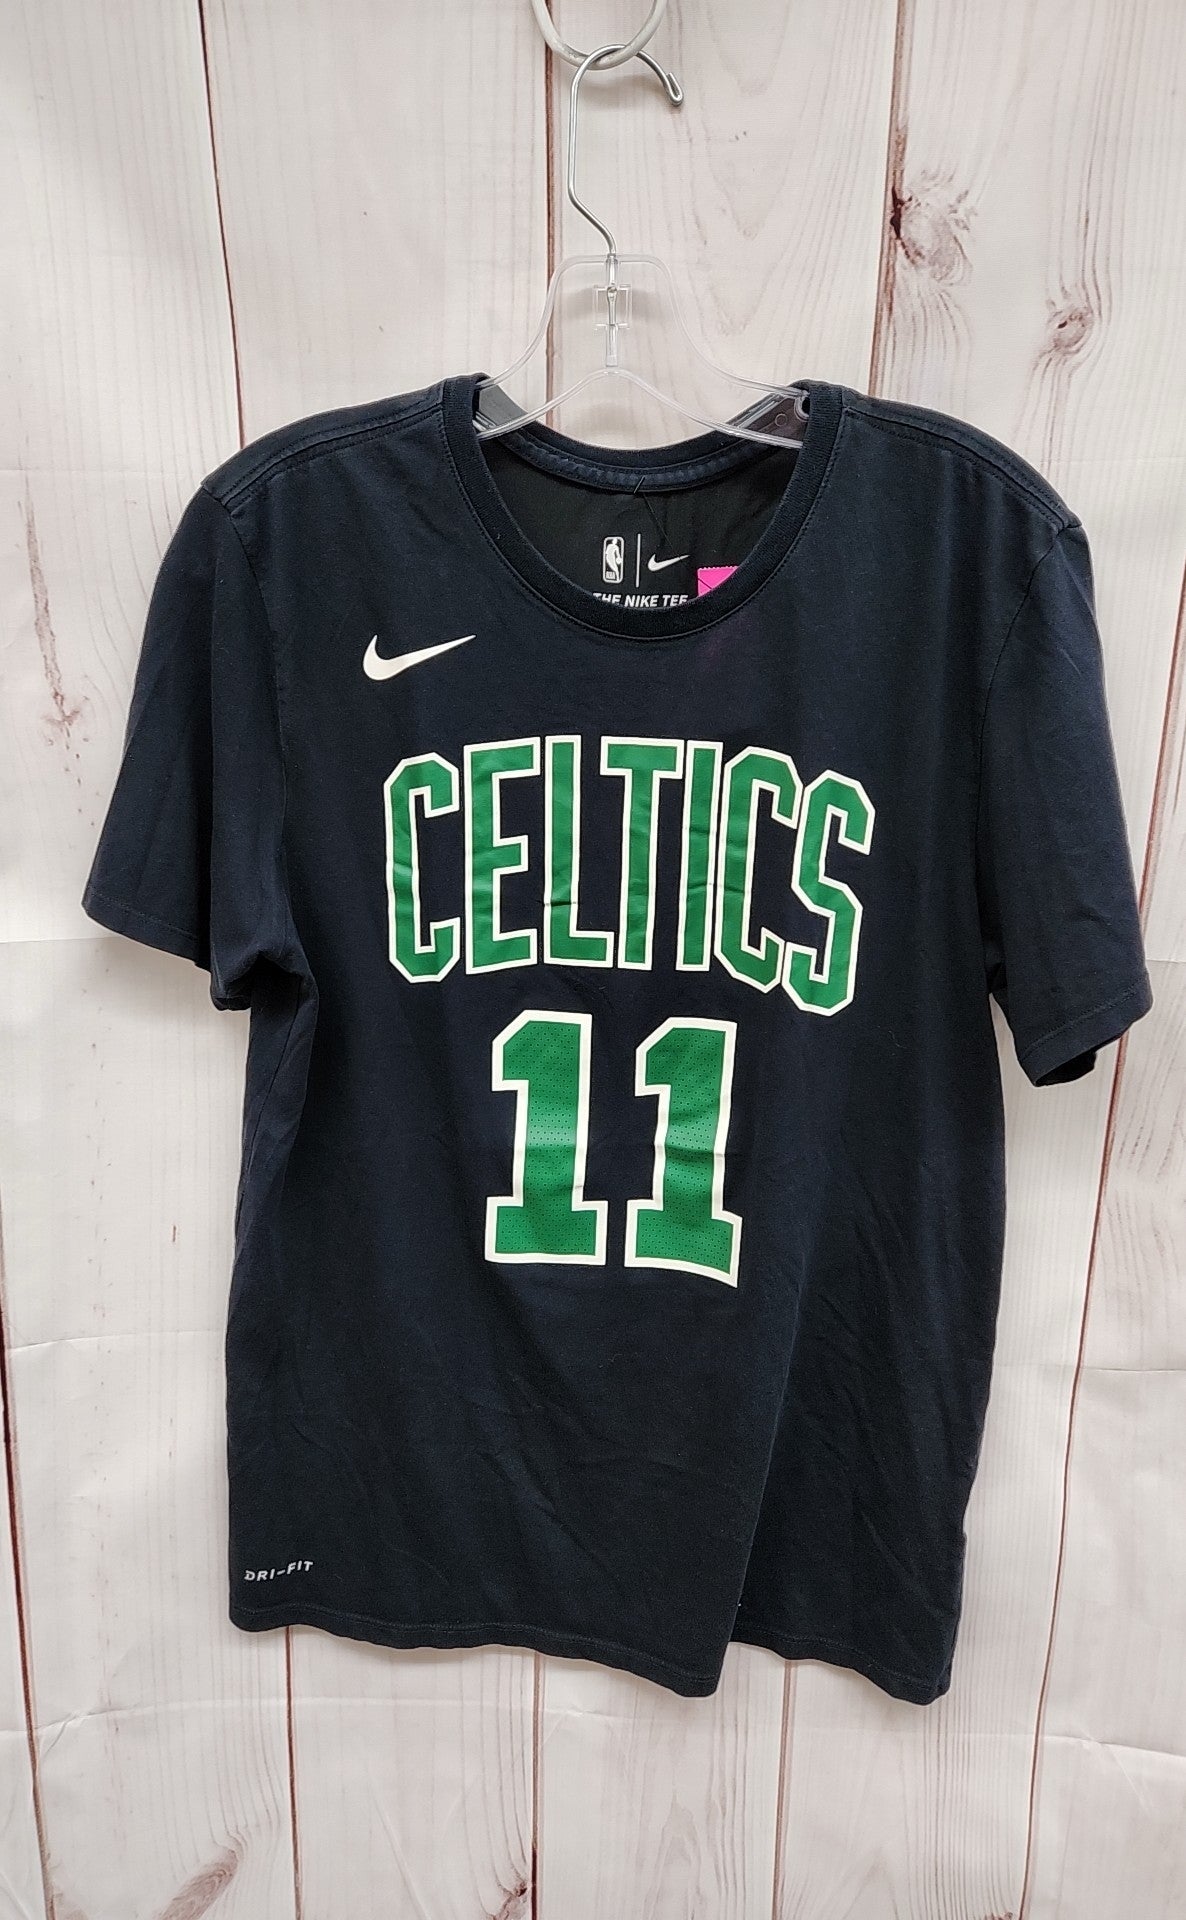 Celtics Men's Size M Black Shirt